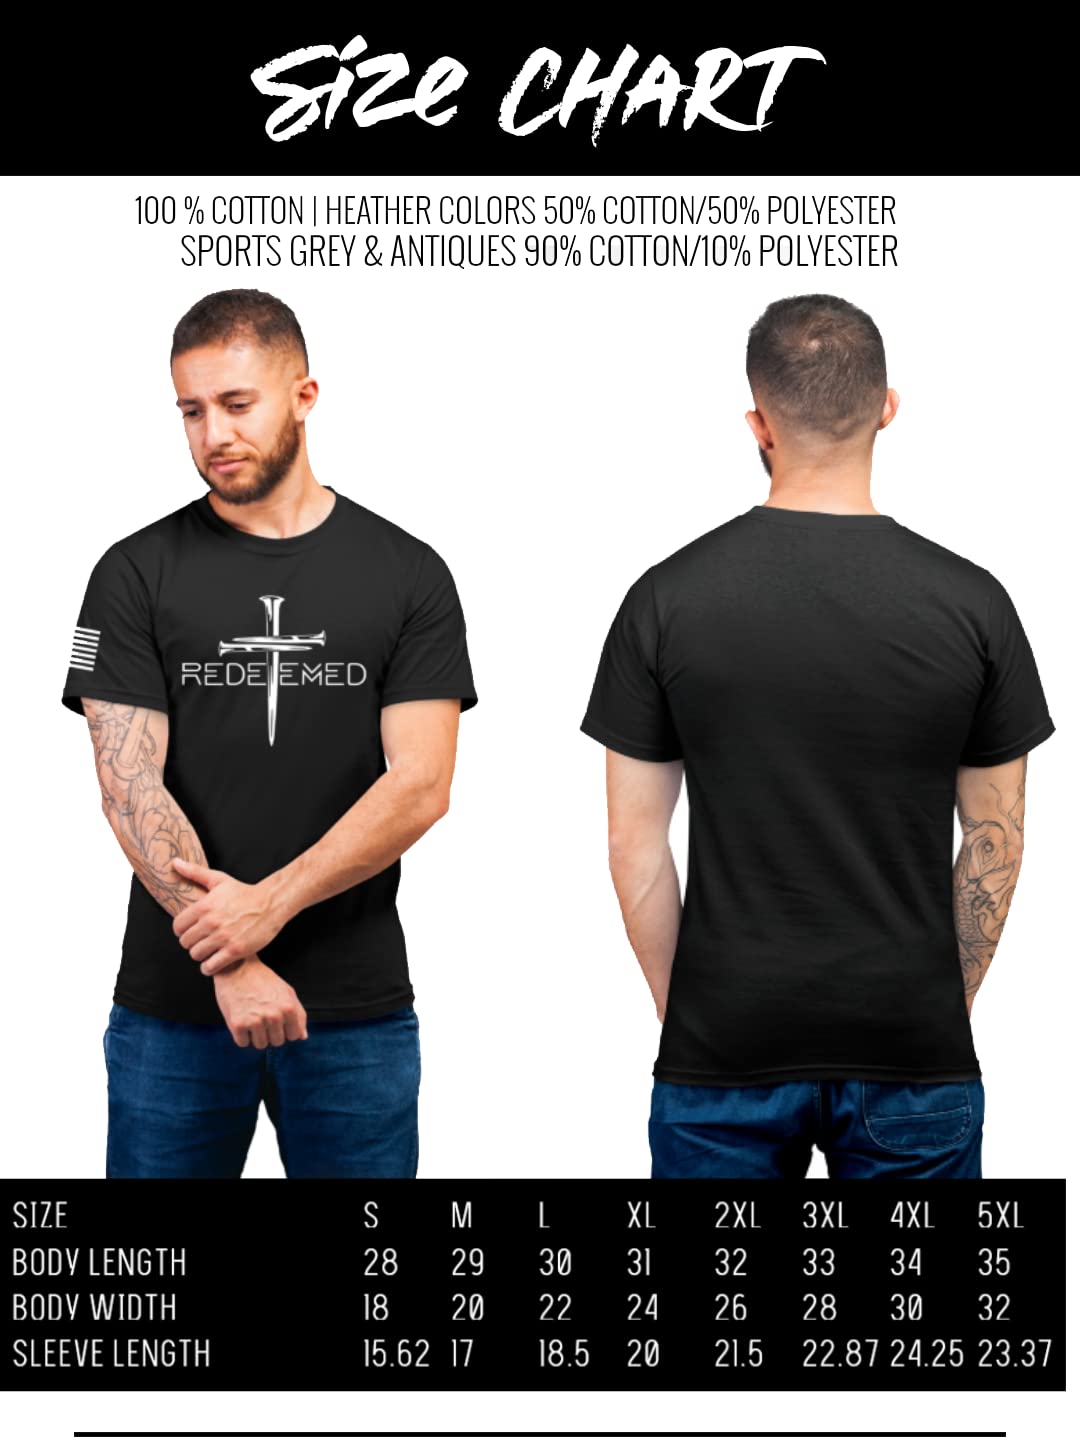 Mens Christian Shirt Nail Cross Unashamed Short Sleeve T-Shirt Graphic Tee